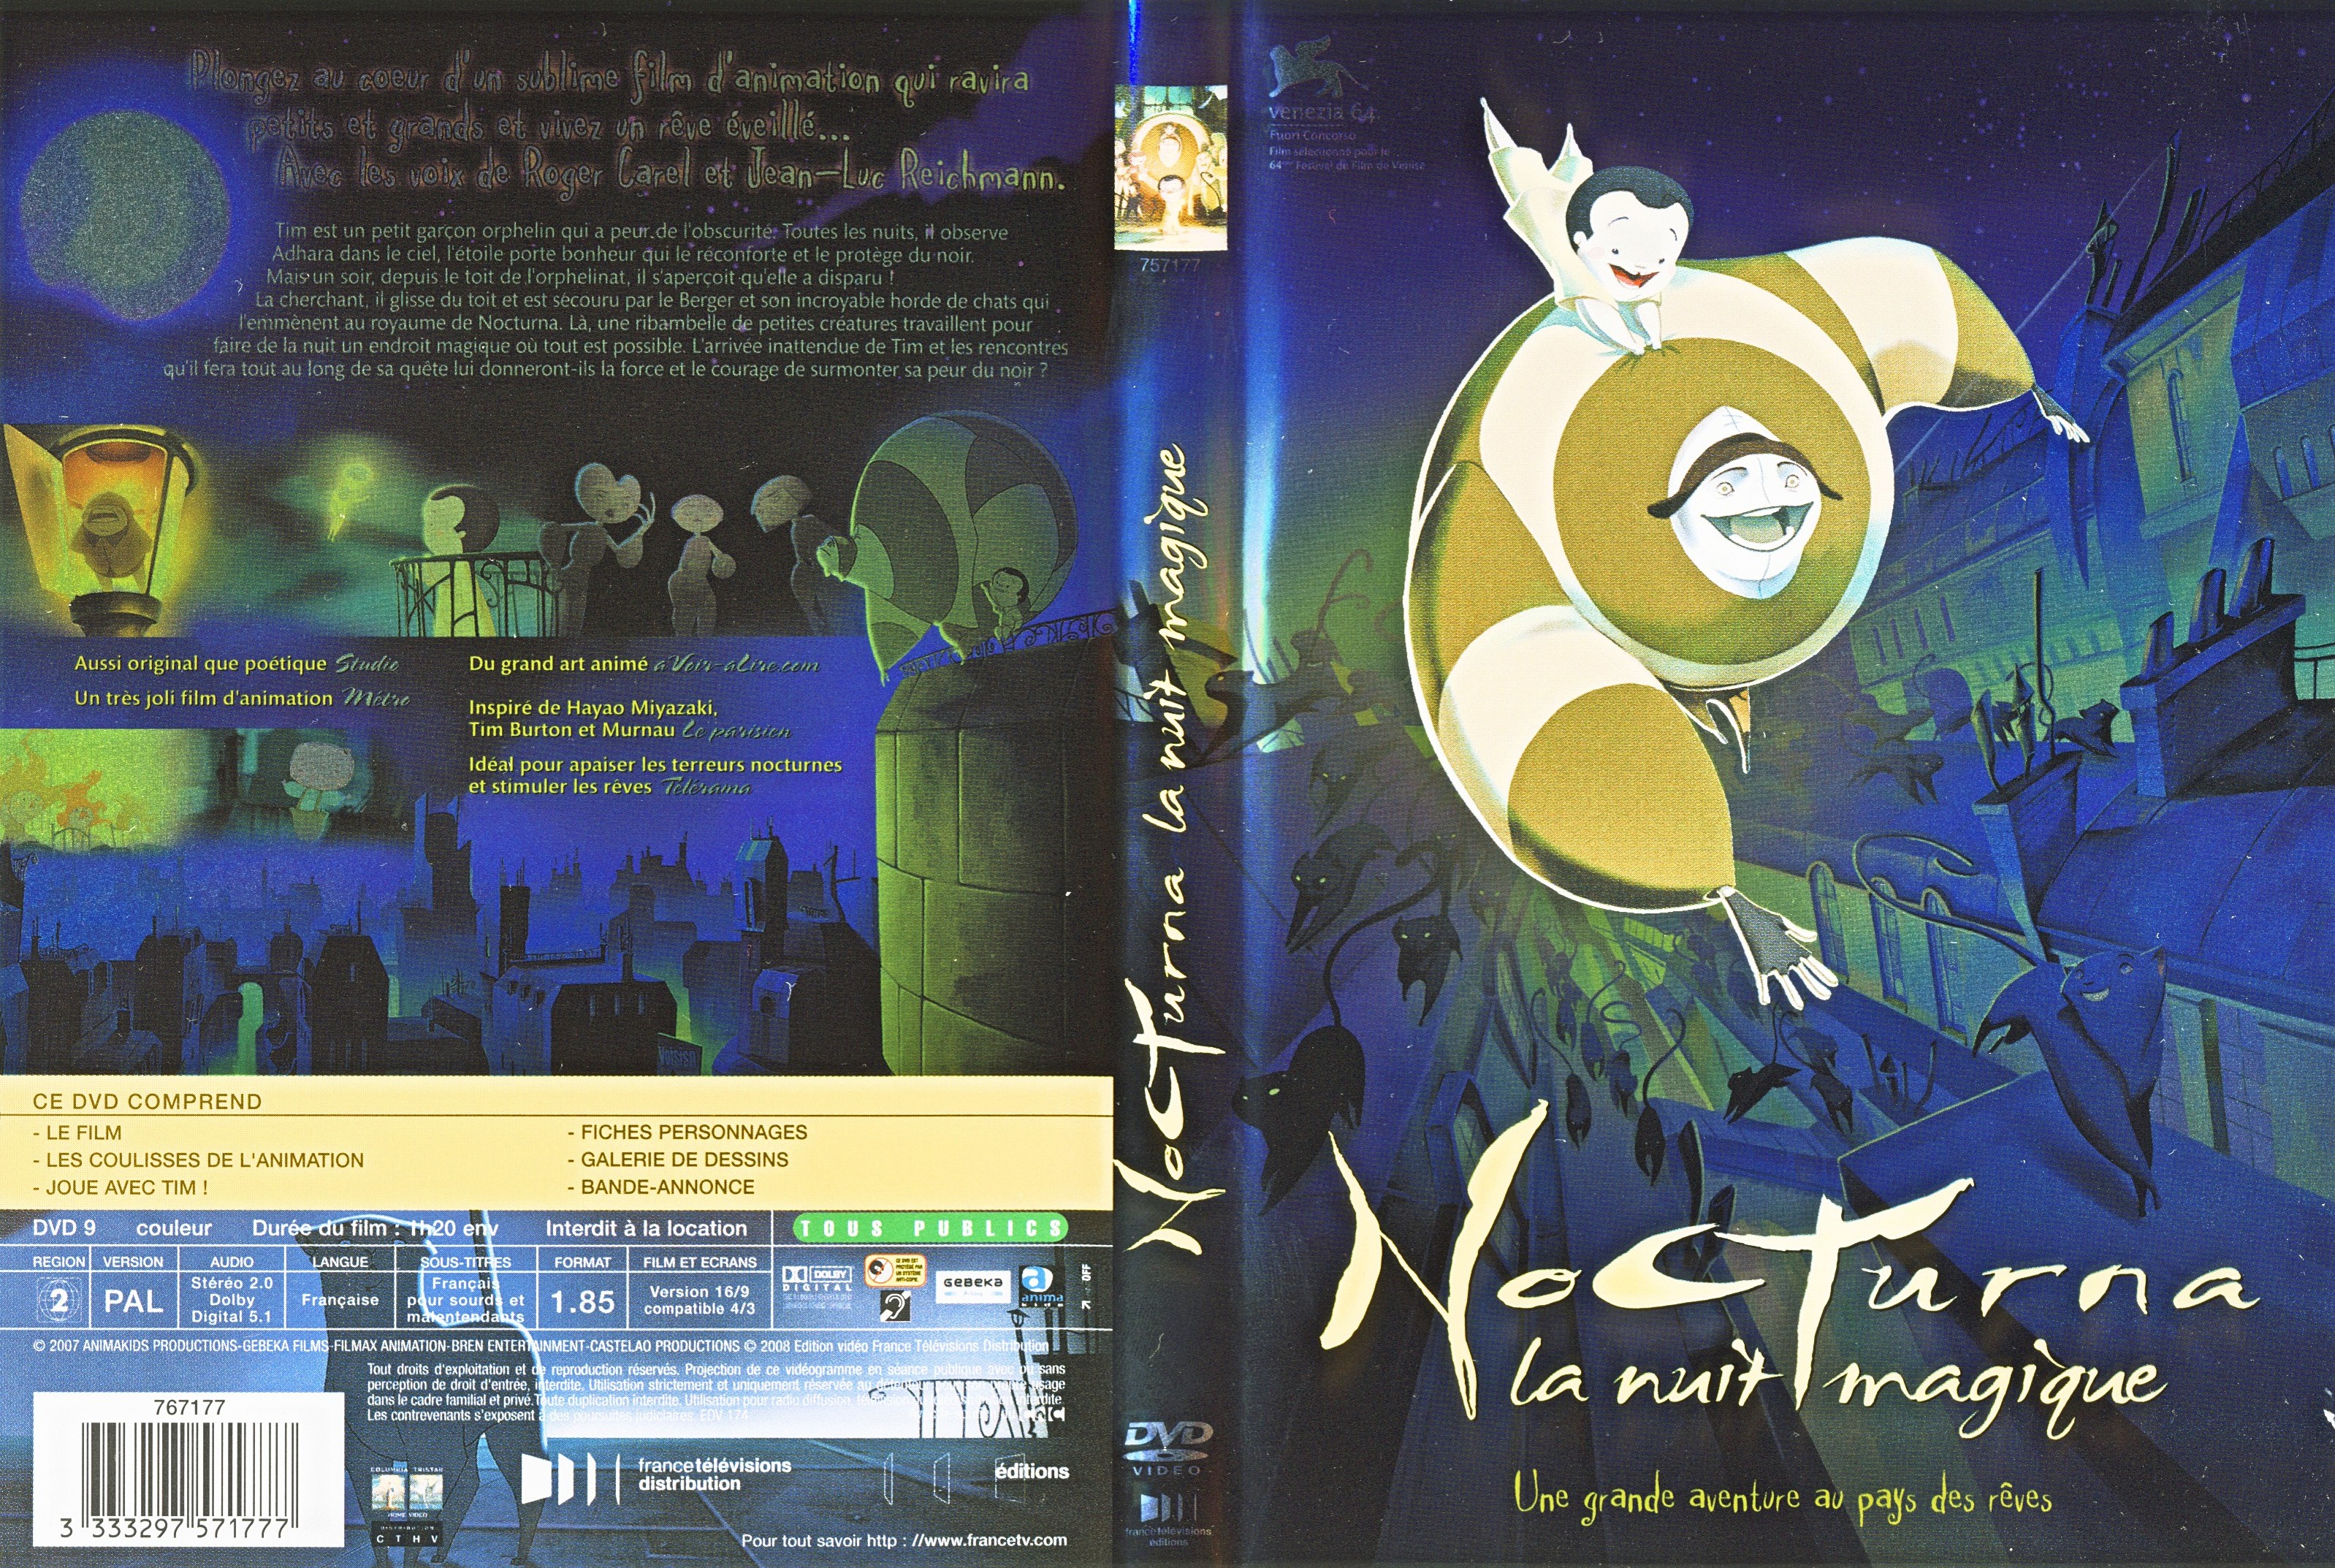 Jaquette DVD Nocturna